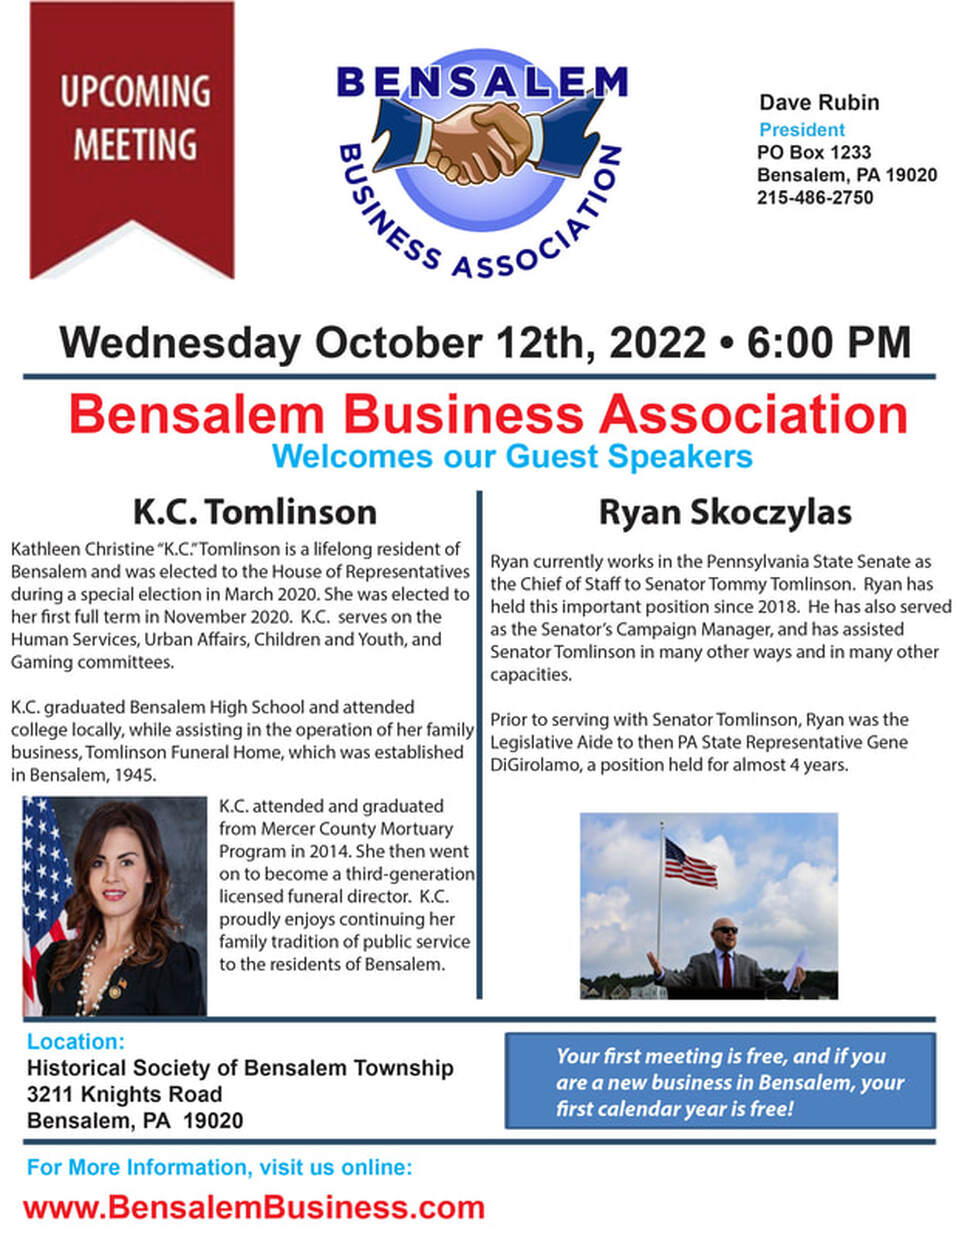 Bensalem Business Association - April 13, 2022 - Judge Joseph P. Falcone